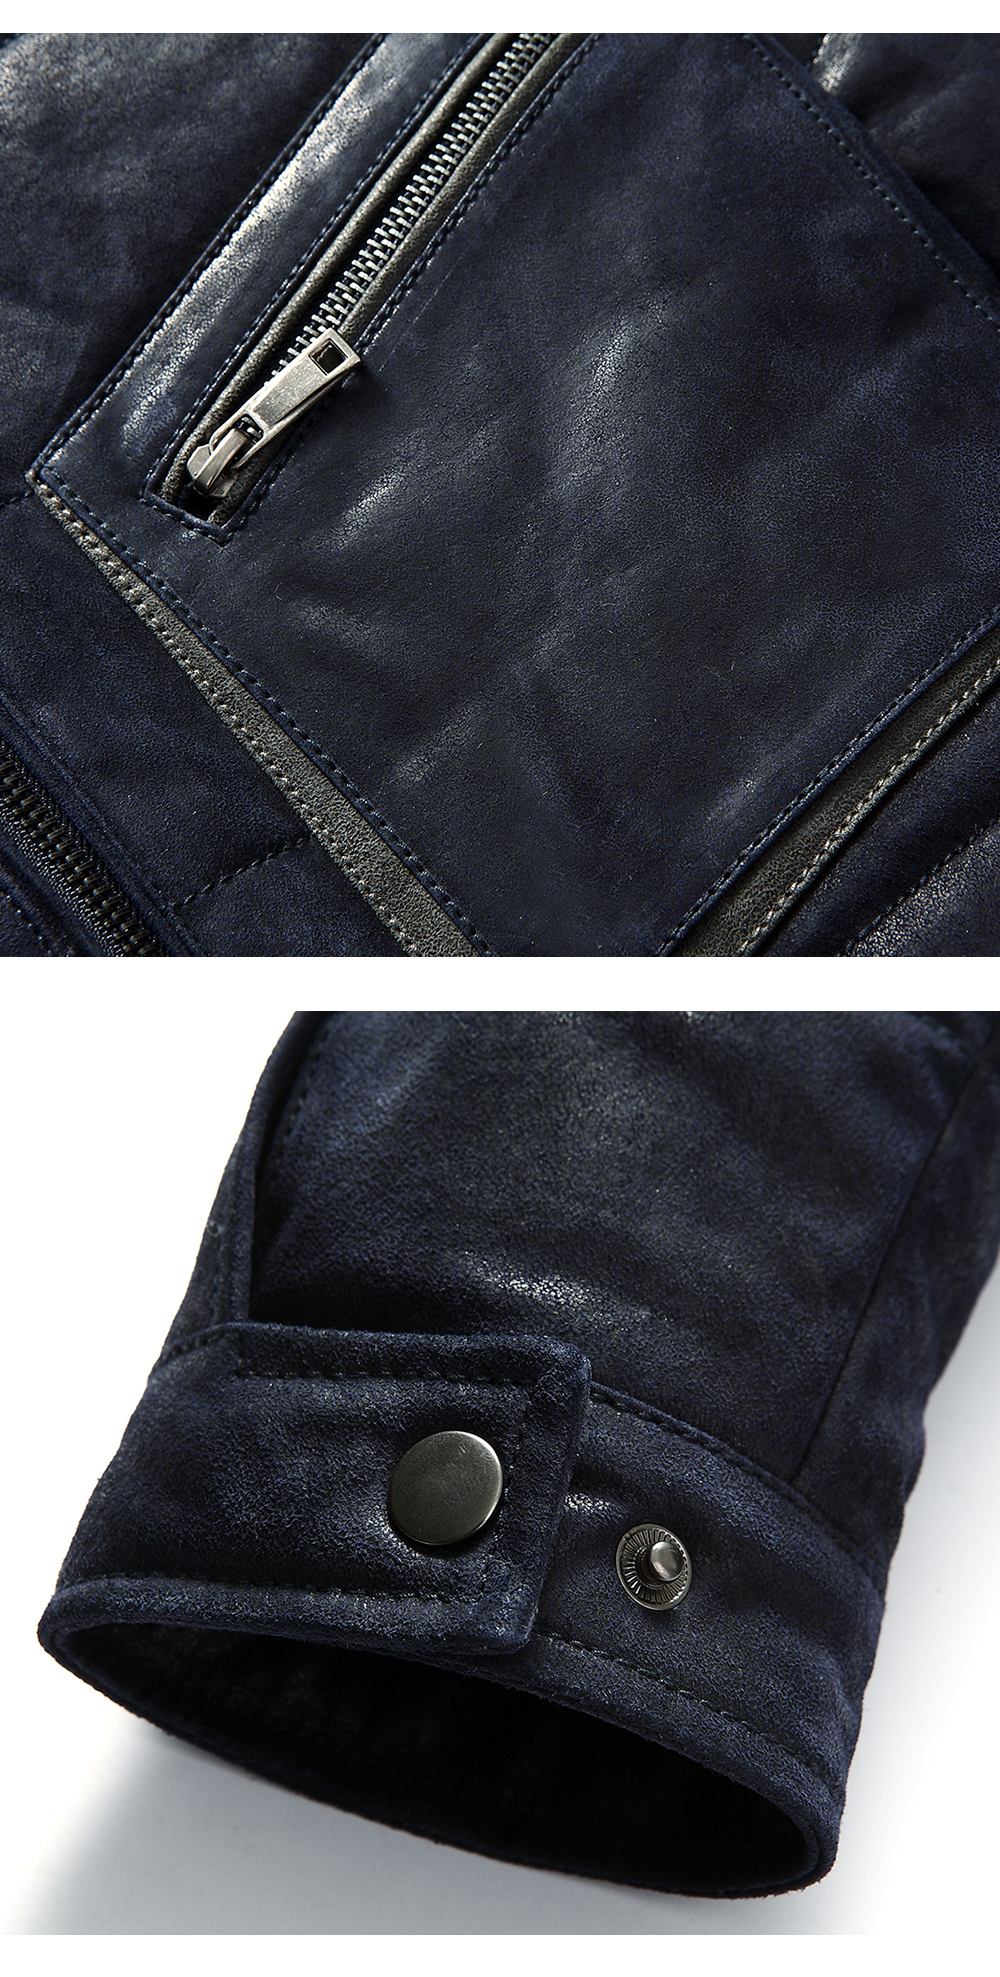 FLAVOR Men's Real Leather Jacket Pigskin Padding Cotton Genuine Leather Jacket FM2015-881 